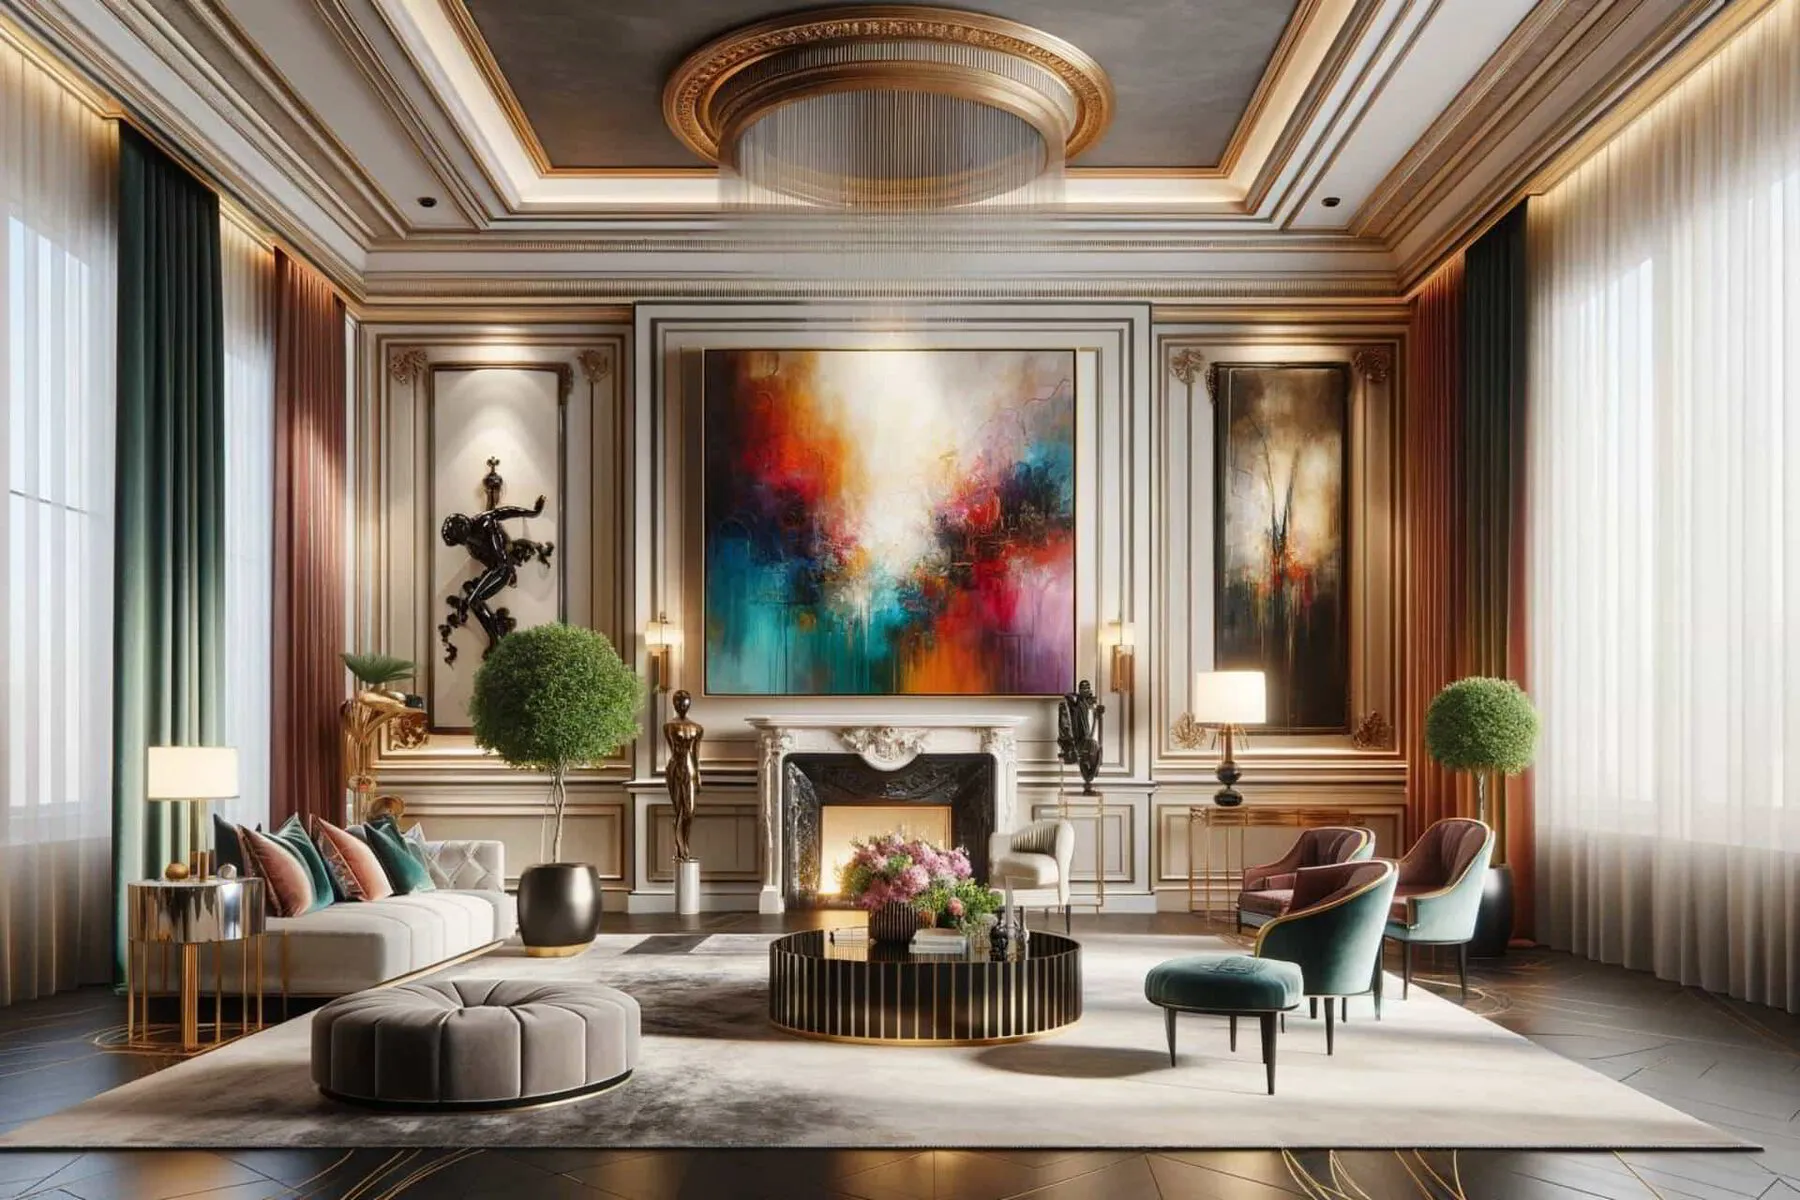 An elegant, luxurious interior design scene that showcases the impact of a statement art piece. 